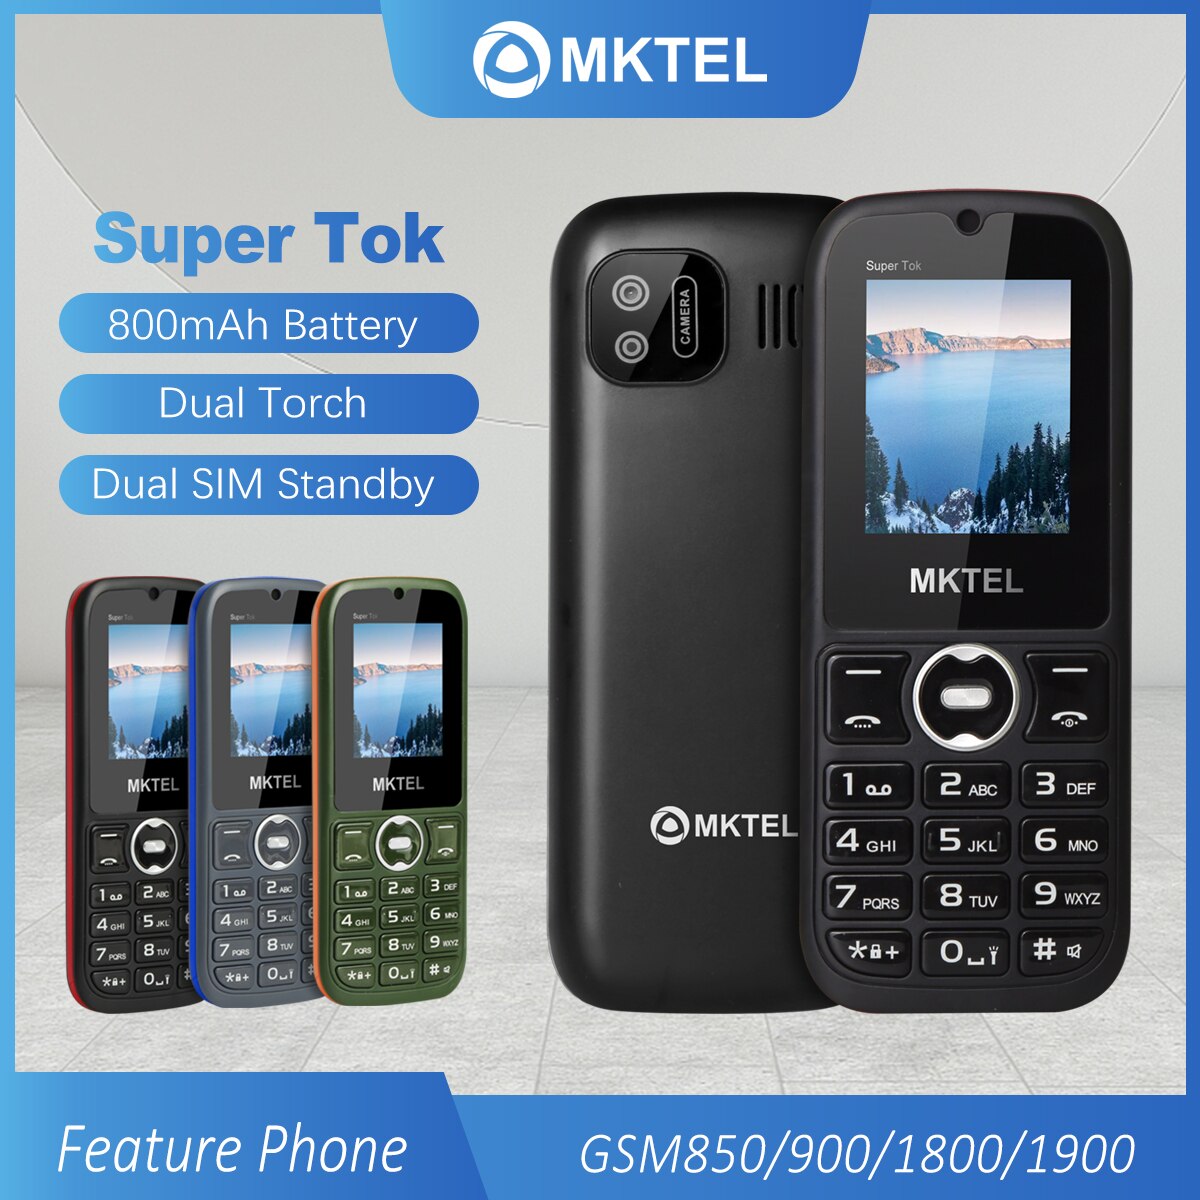 MKTEL SUPER TOK Feature Phone 1.77″ Display 800mAh Battery Dual SIM Standby MP3 MP4 FM Radio For Senior